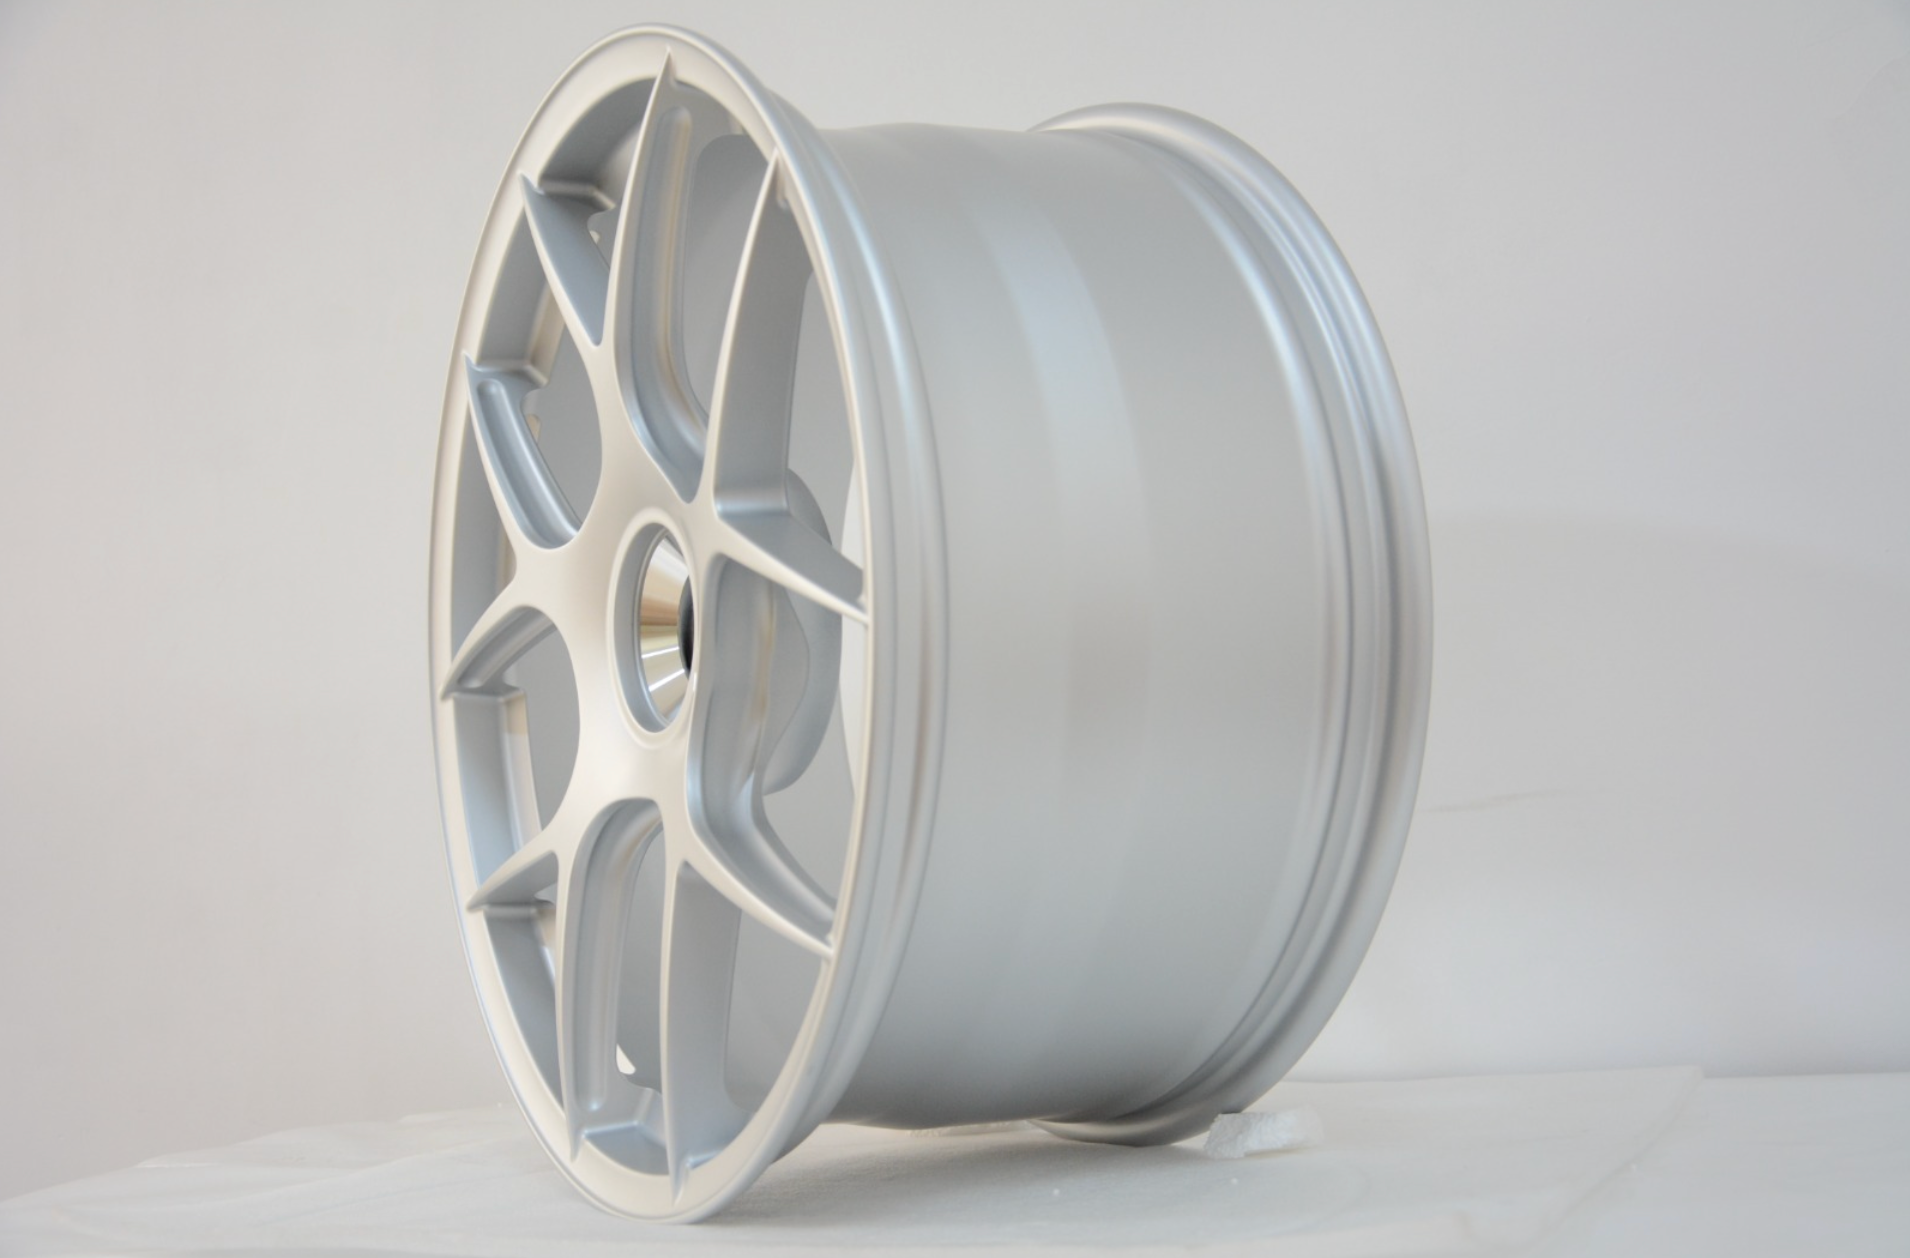 Wheels and Tires/Axles - Meisterwerk Racing - 992 GT3 "ST" Wheel set - New - 0  All Models - Calabasas, CA 91302, United States